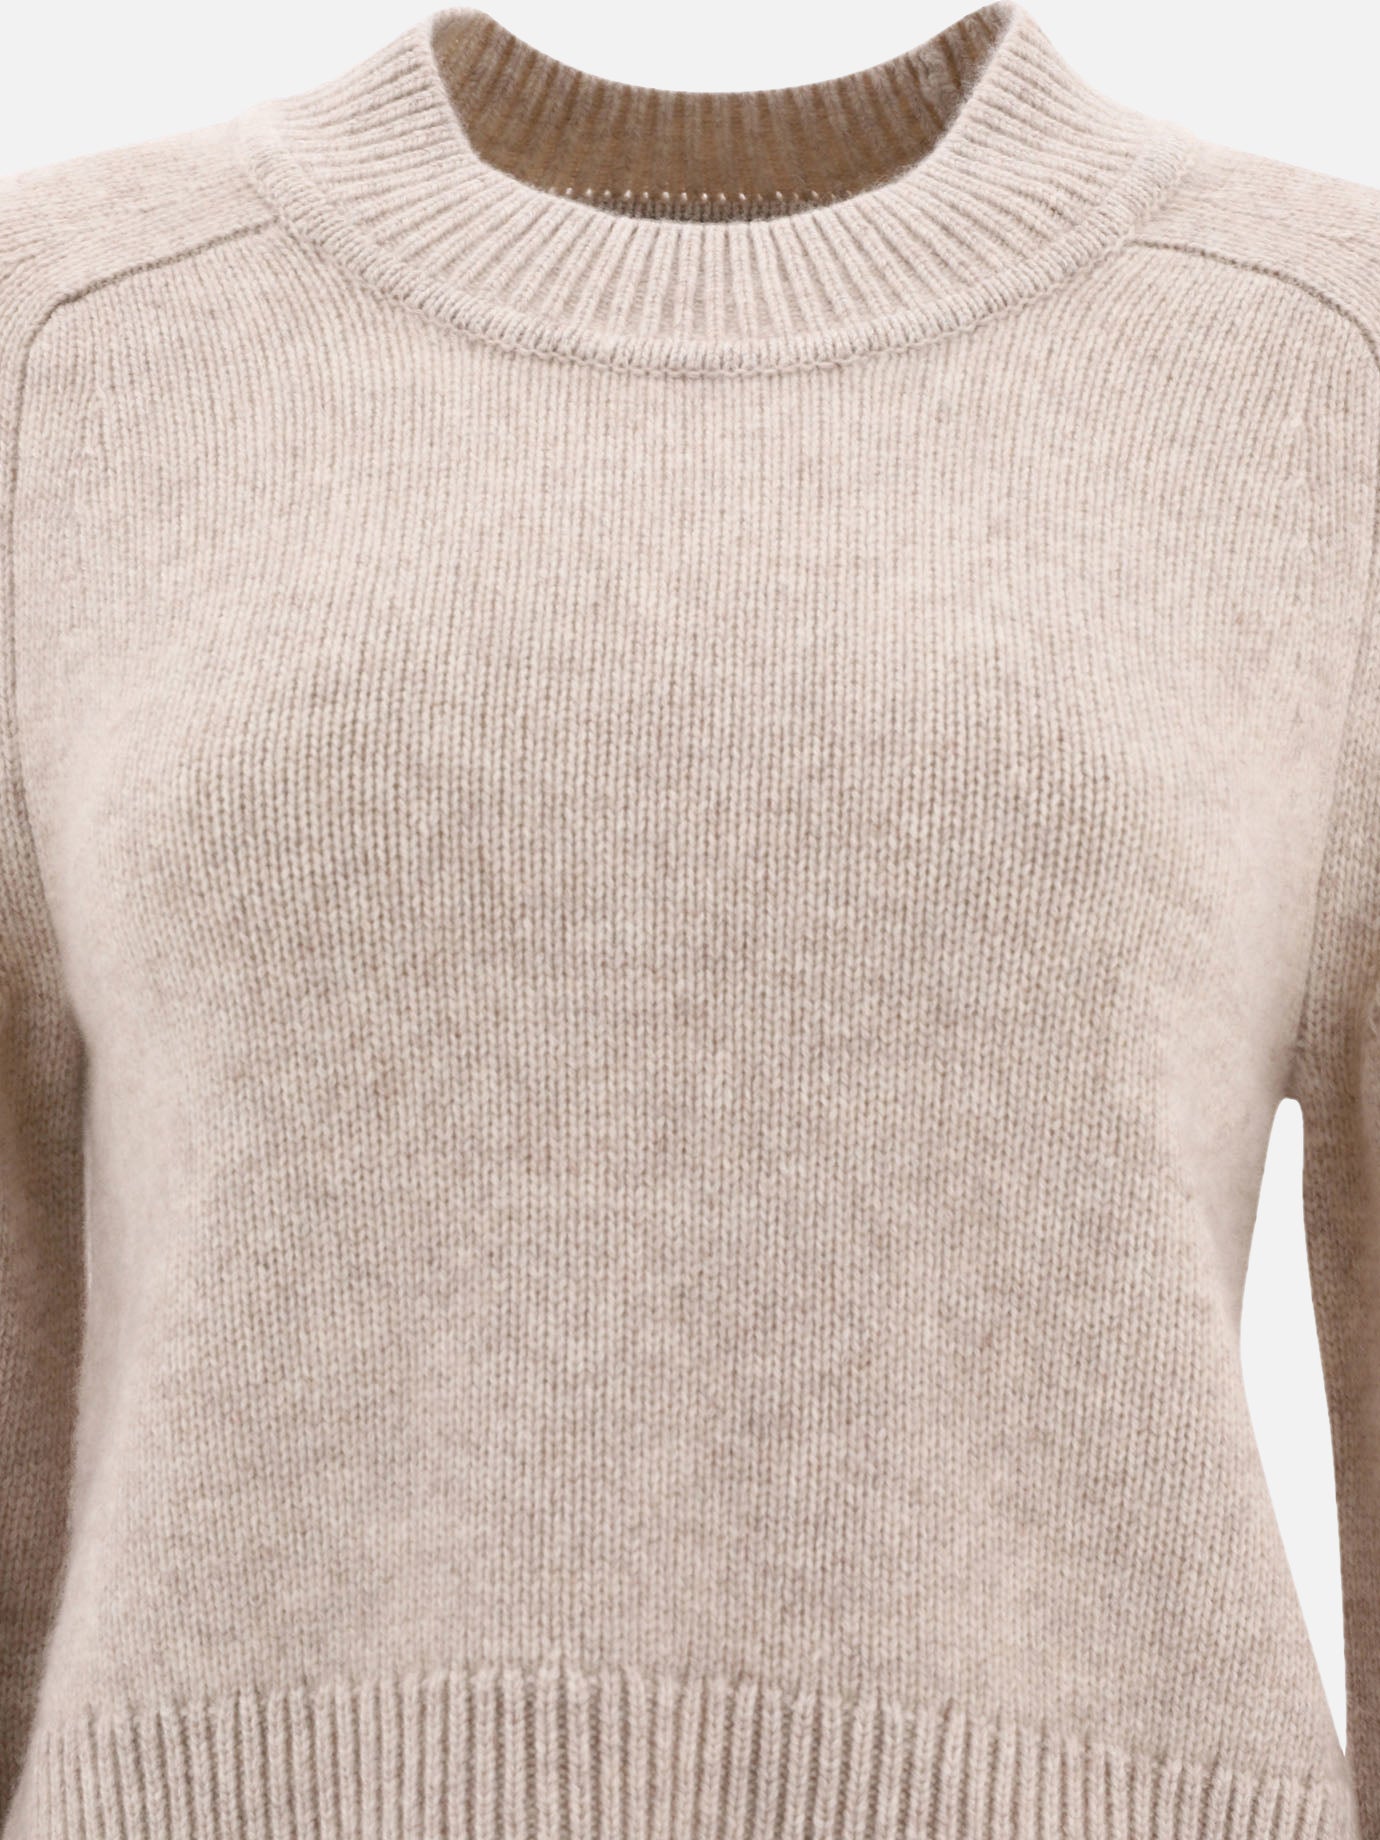 "Leandra" sweater